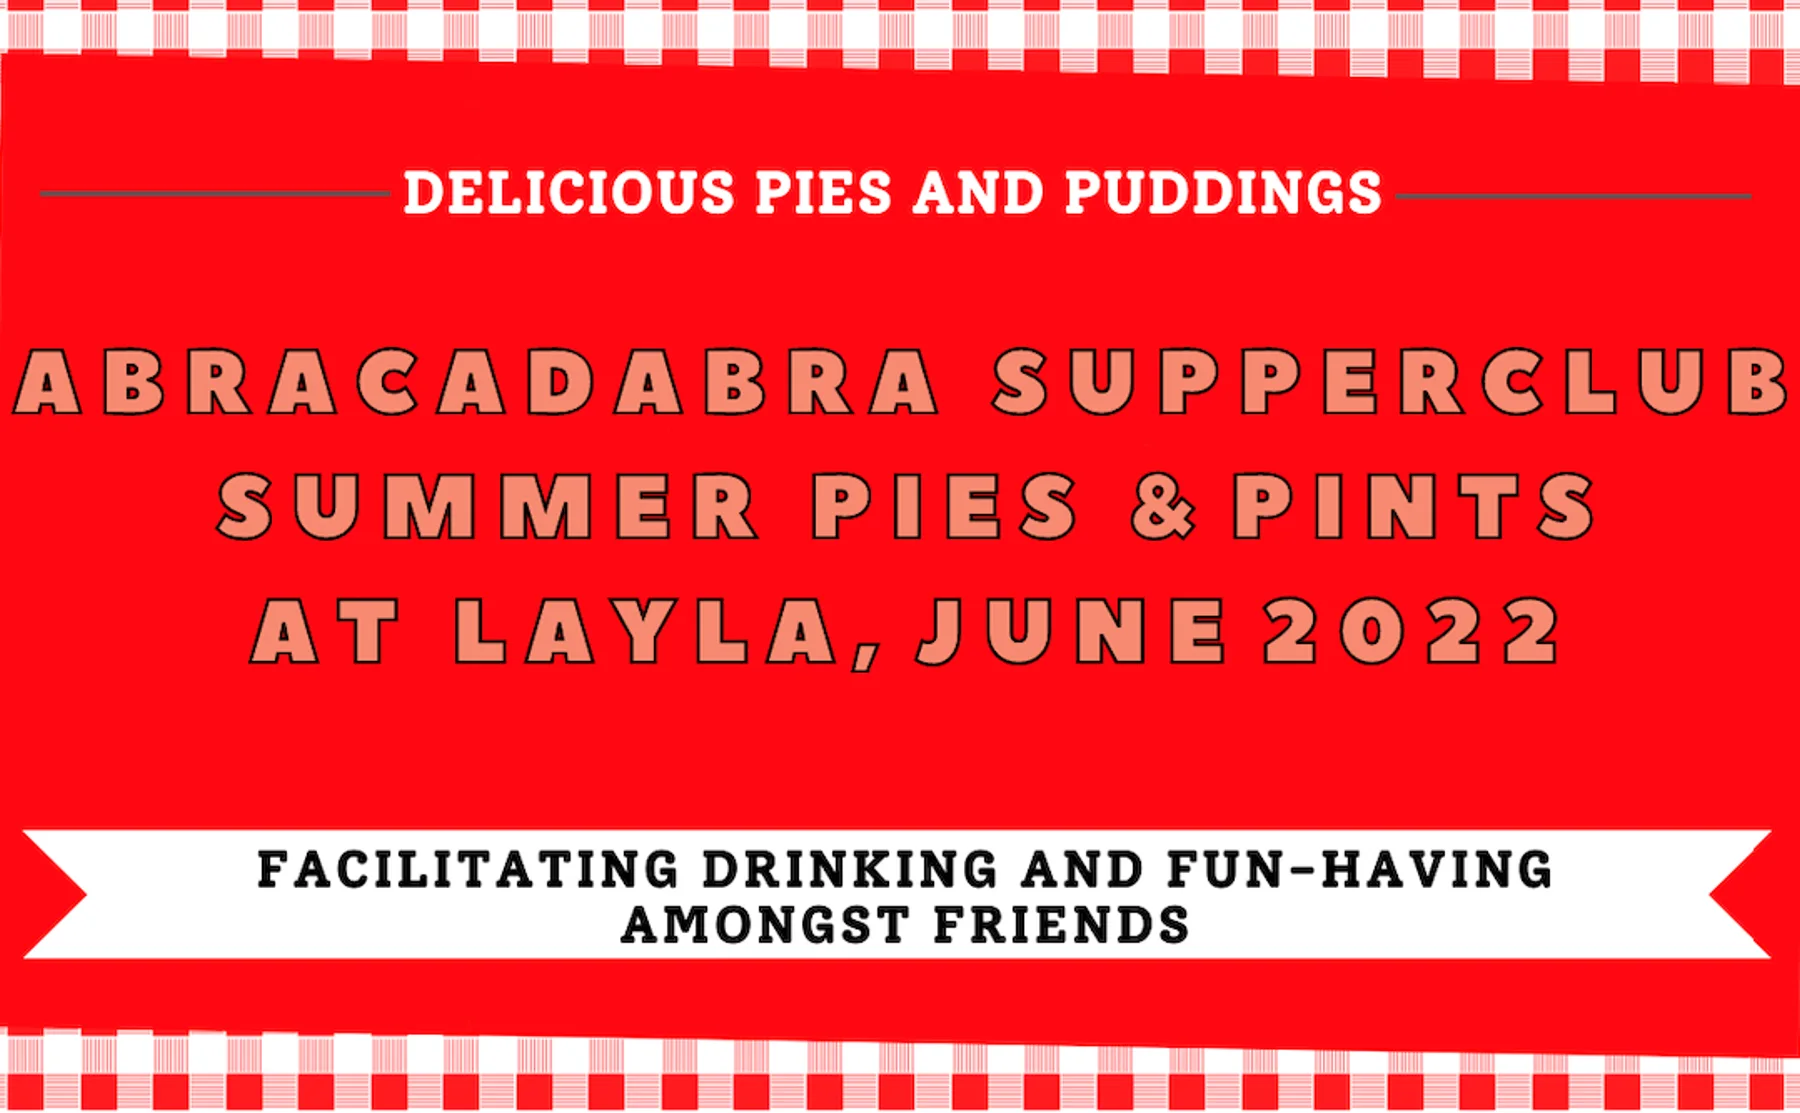 abracadabra Supper Club Series: Summer Pies / Pints - 1472055